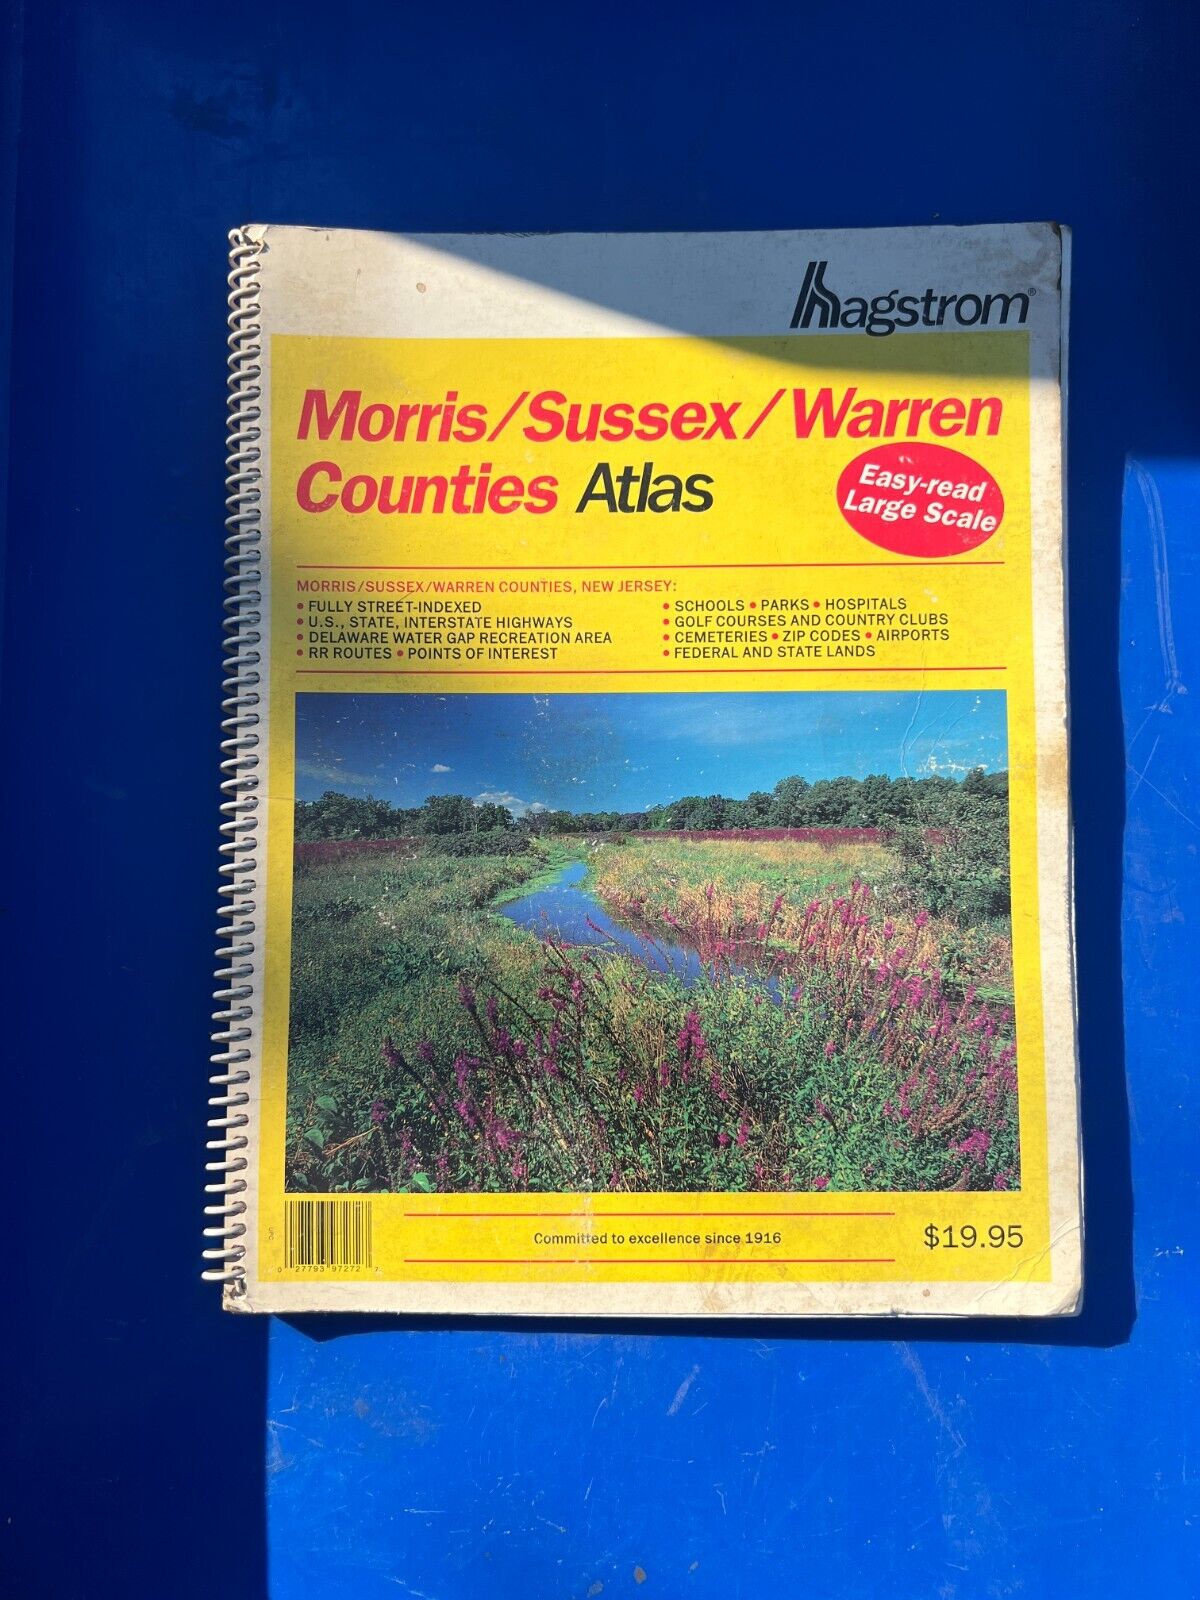 Hagstrom Morris/Sussex/Warren Counties Atlas Large Scale Edition 1997